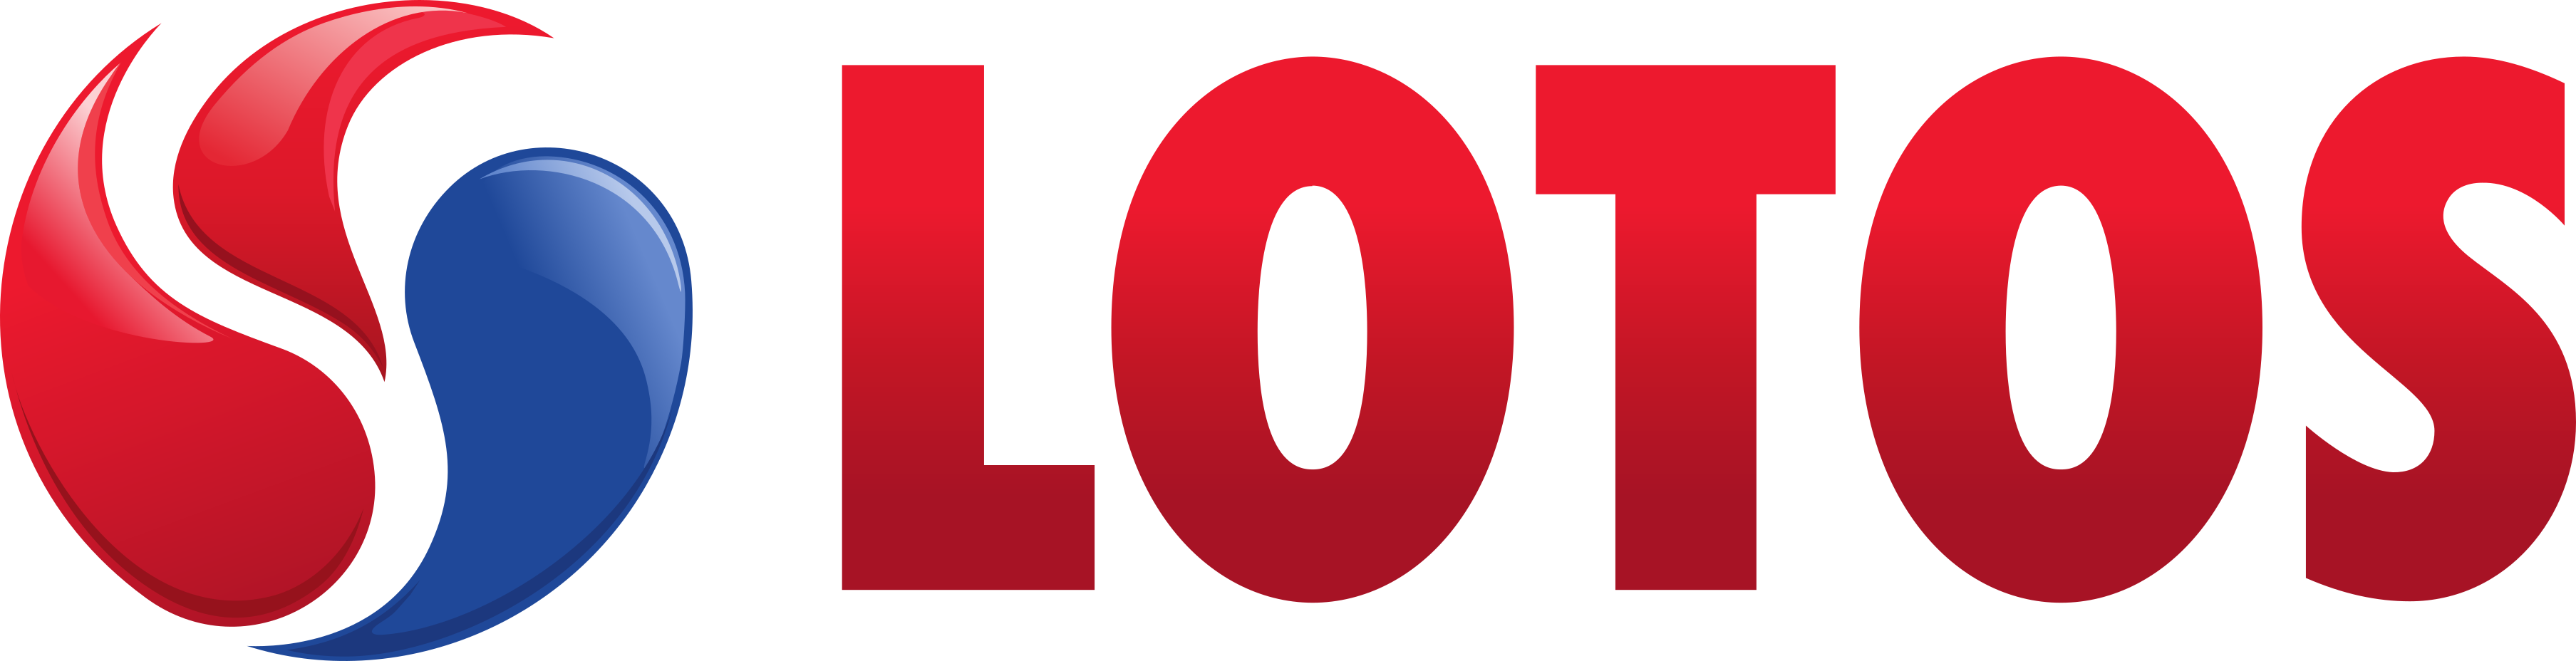 Масло лого. Автомасла лого Lotos. Масло логотип. Лотос логотип. Lotos Польша логотип.